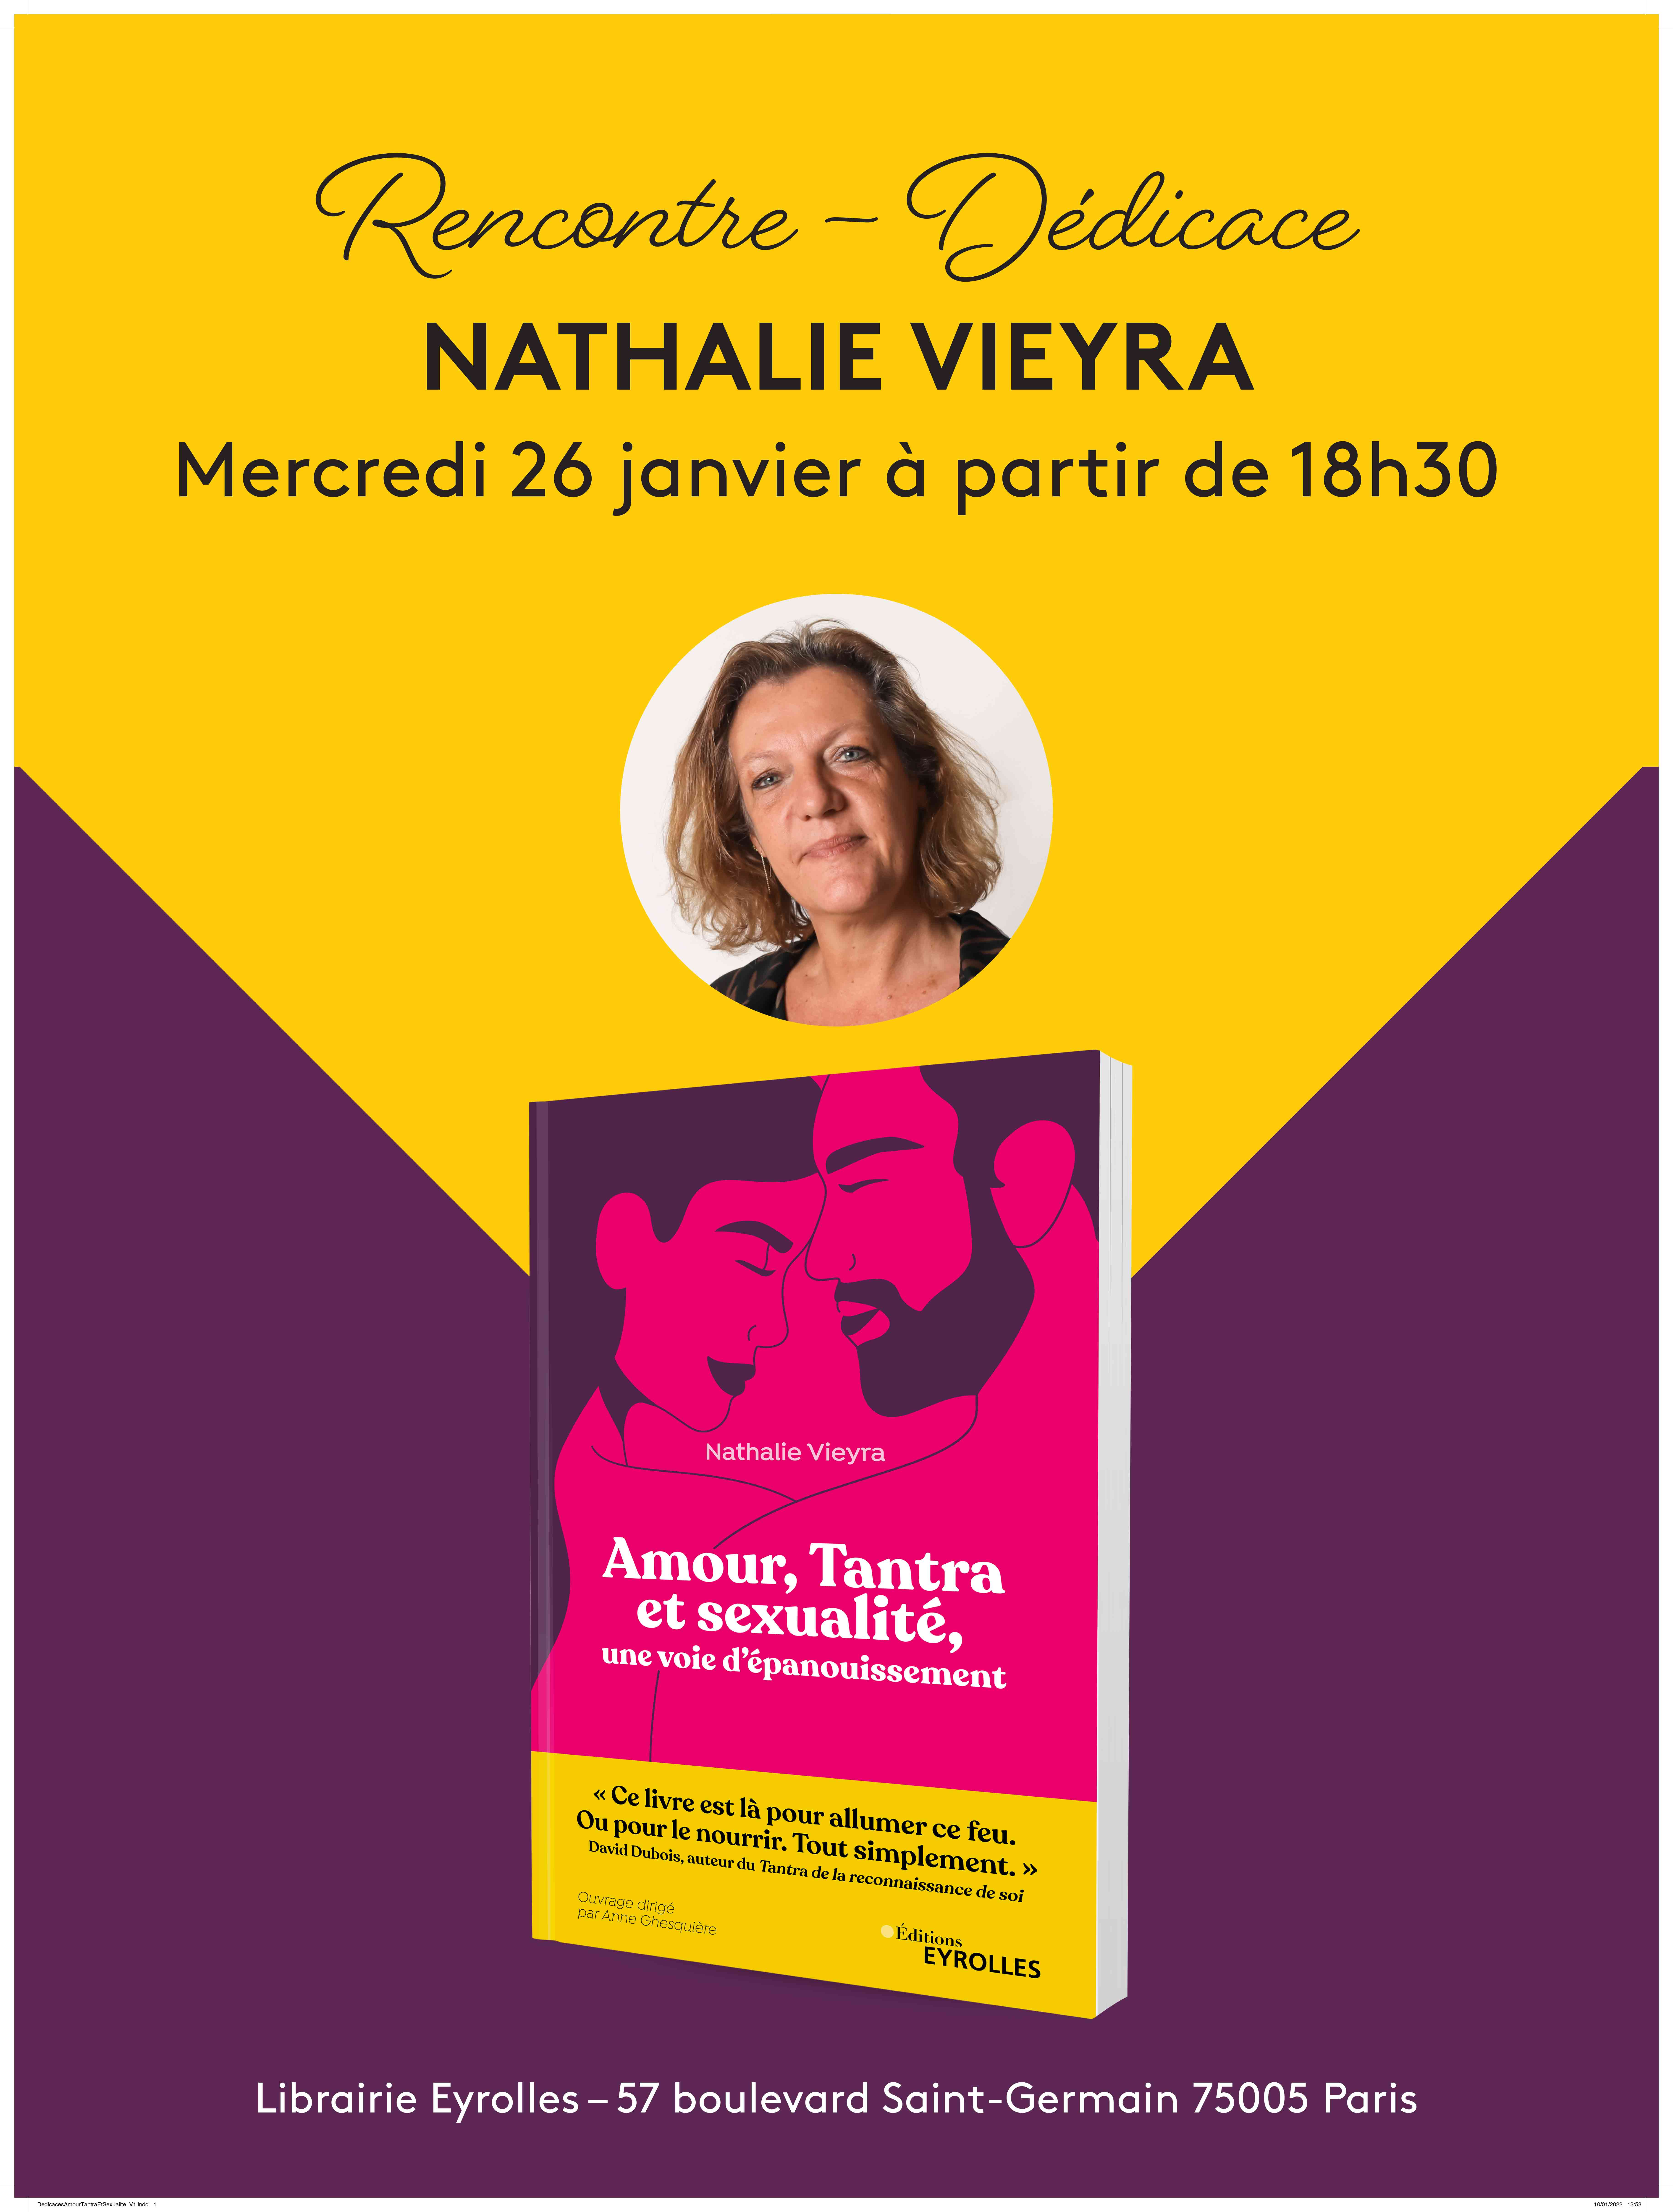 Rencontre avec Nathalie Vieyra